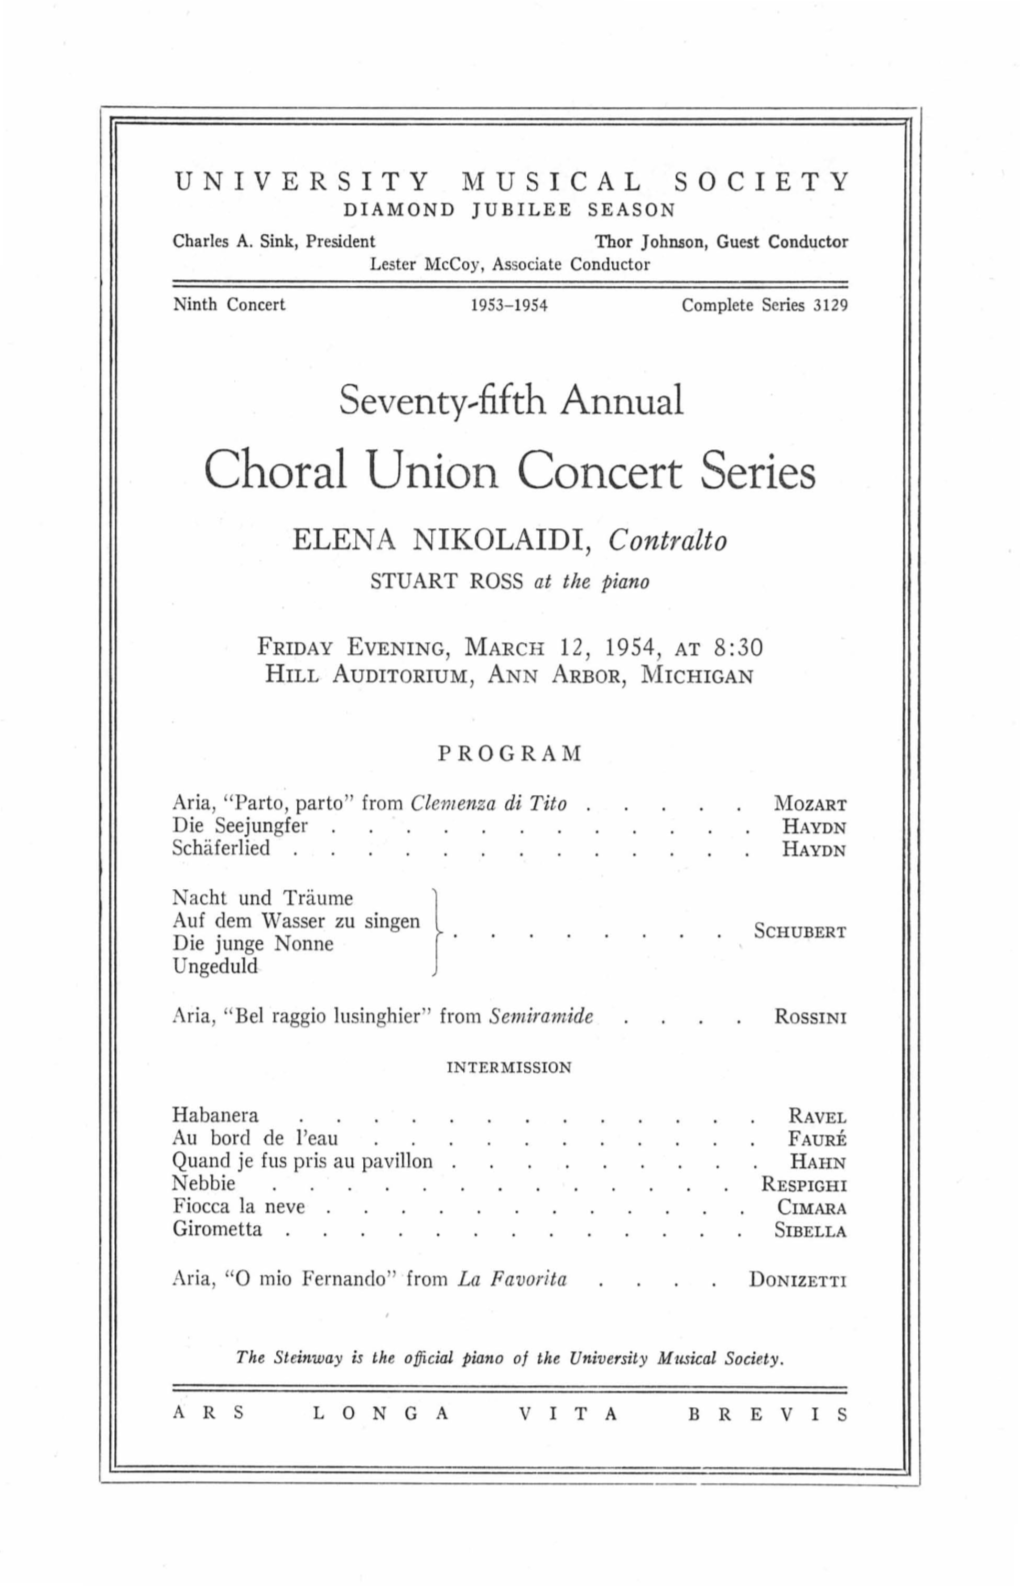 Choral Union Concert Series ELENA NIKOLAIDI, Contralto STUART ROSS at the Piano